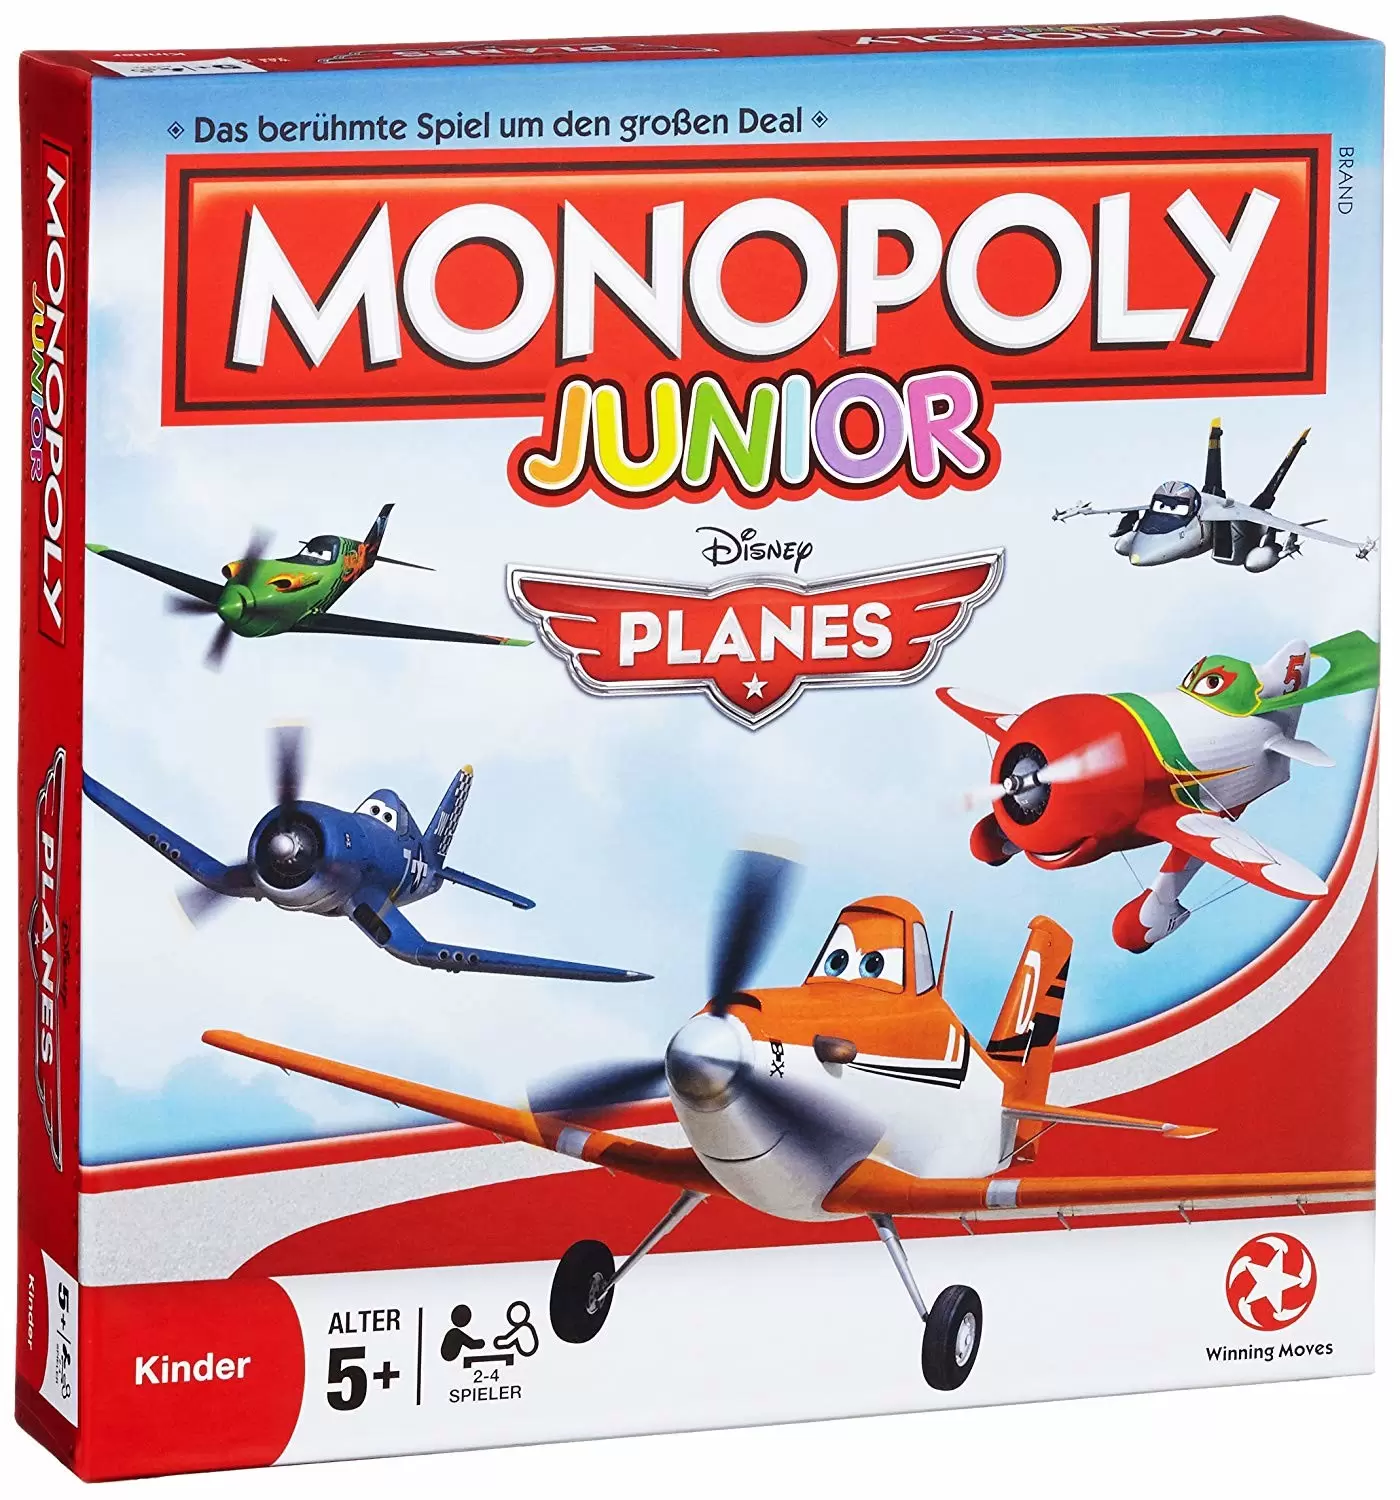 Monopoly Movies & TV Series - Monopoly Junior Planes